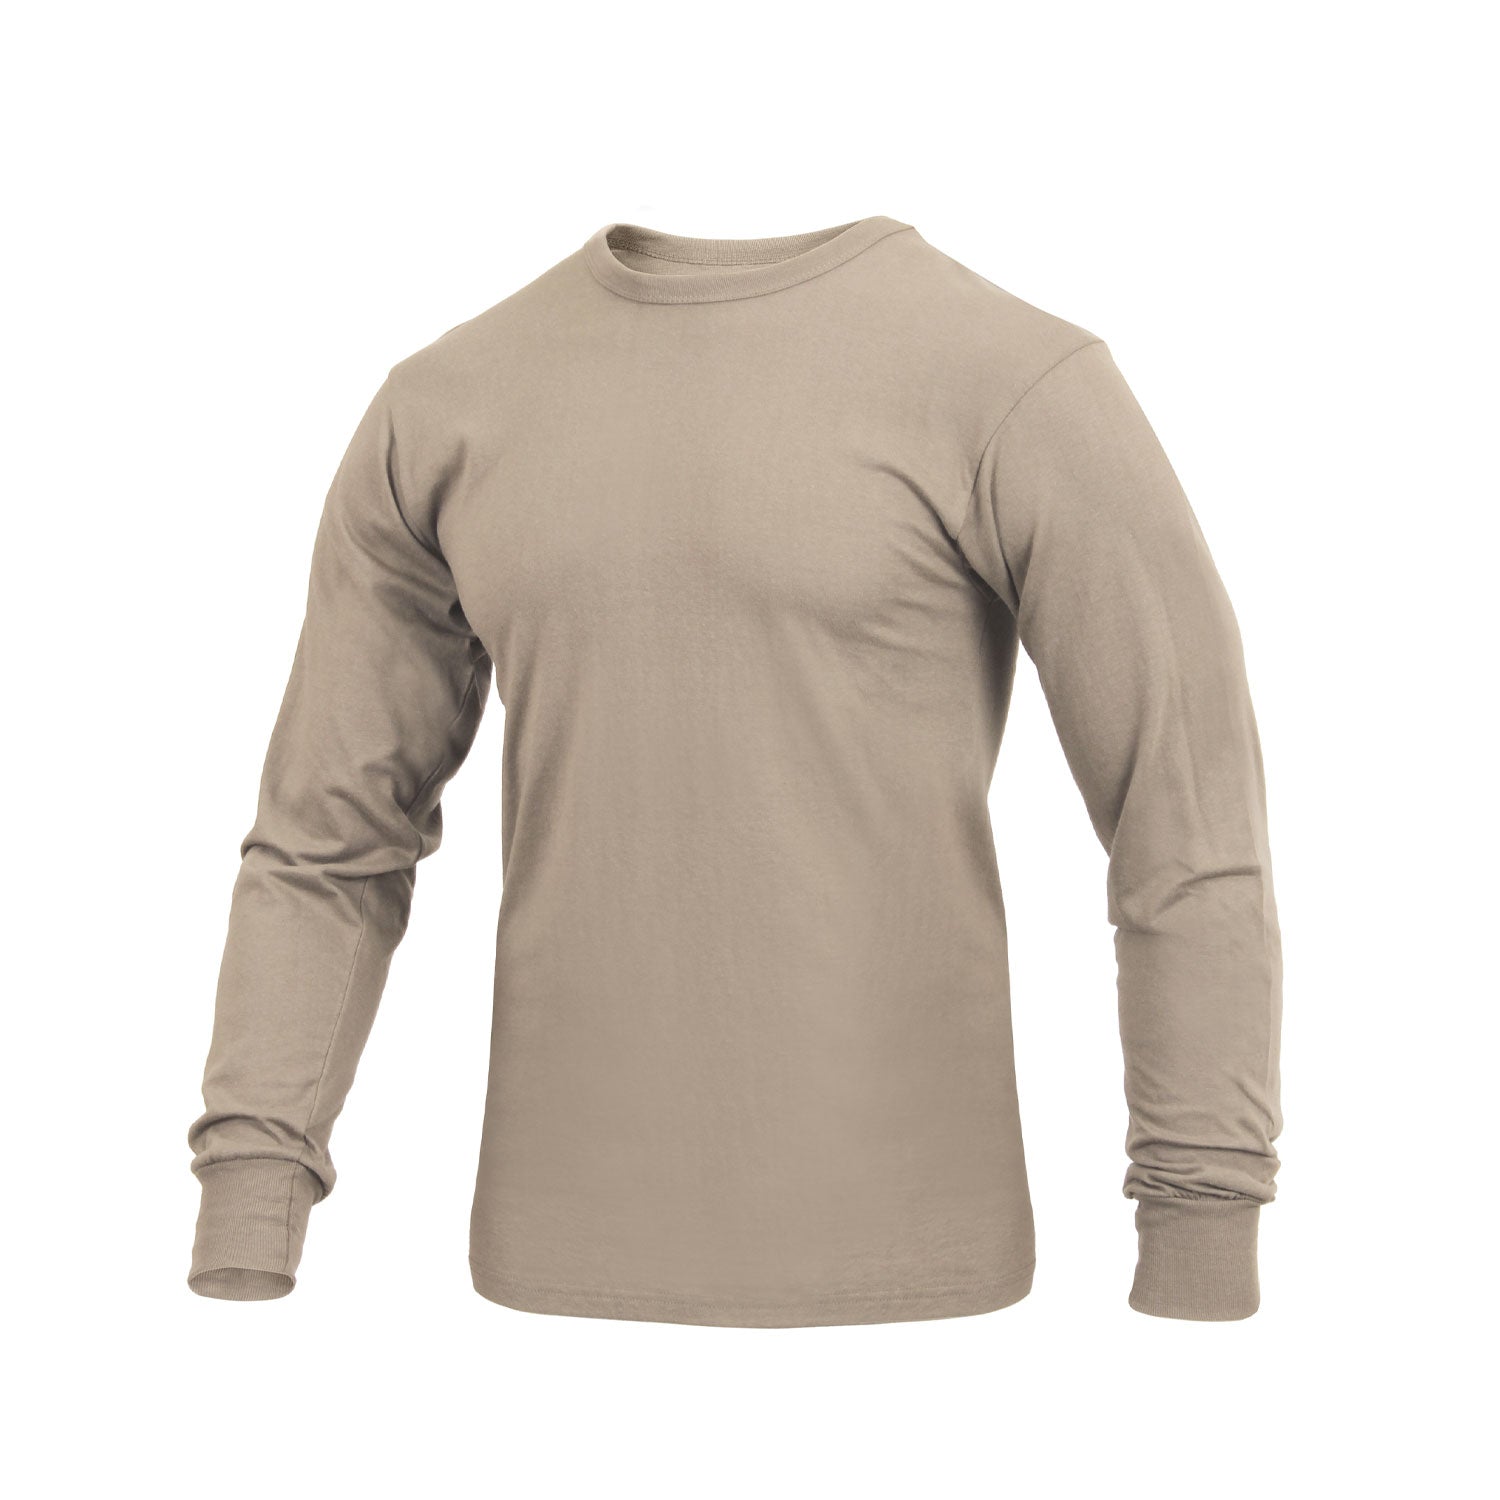 [AR 670-1] Poly Moisture Wicking Long Sleeve Shirts